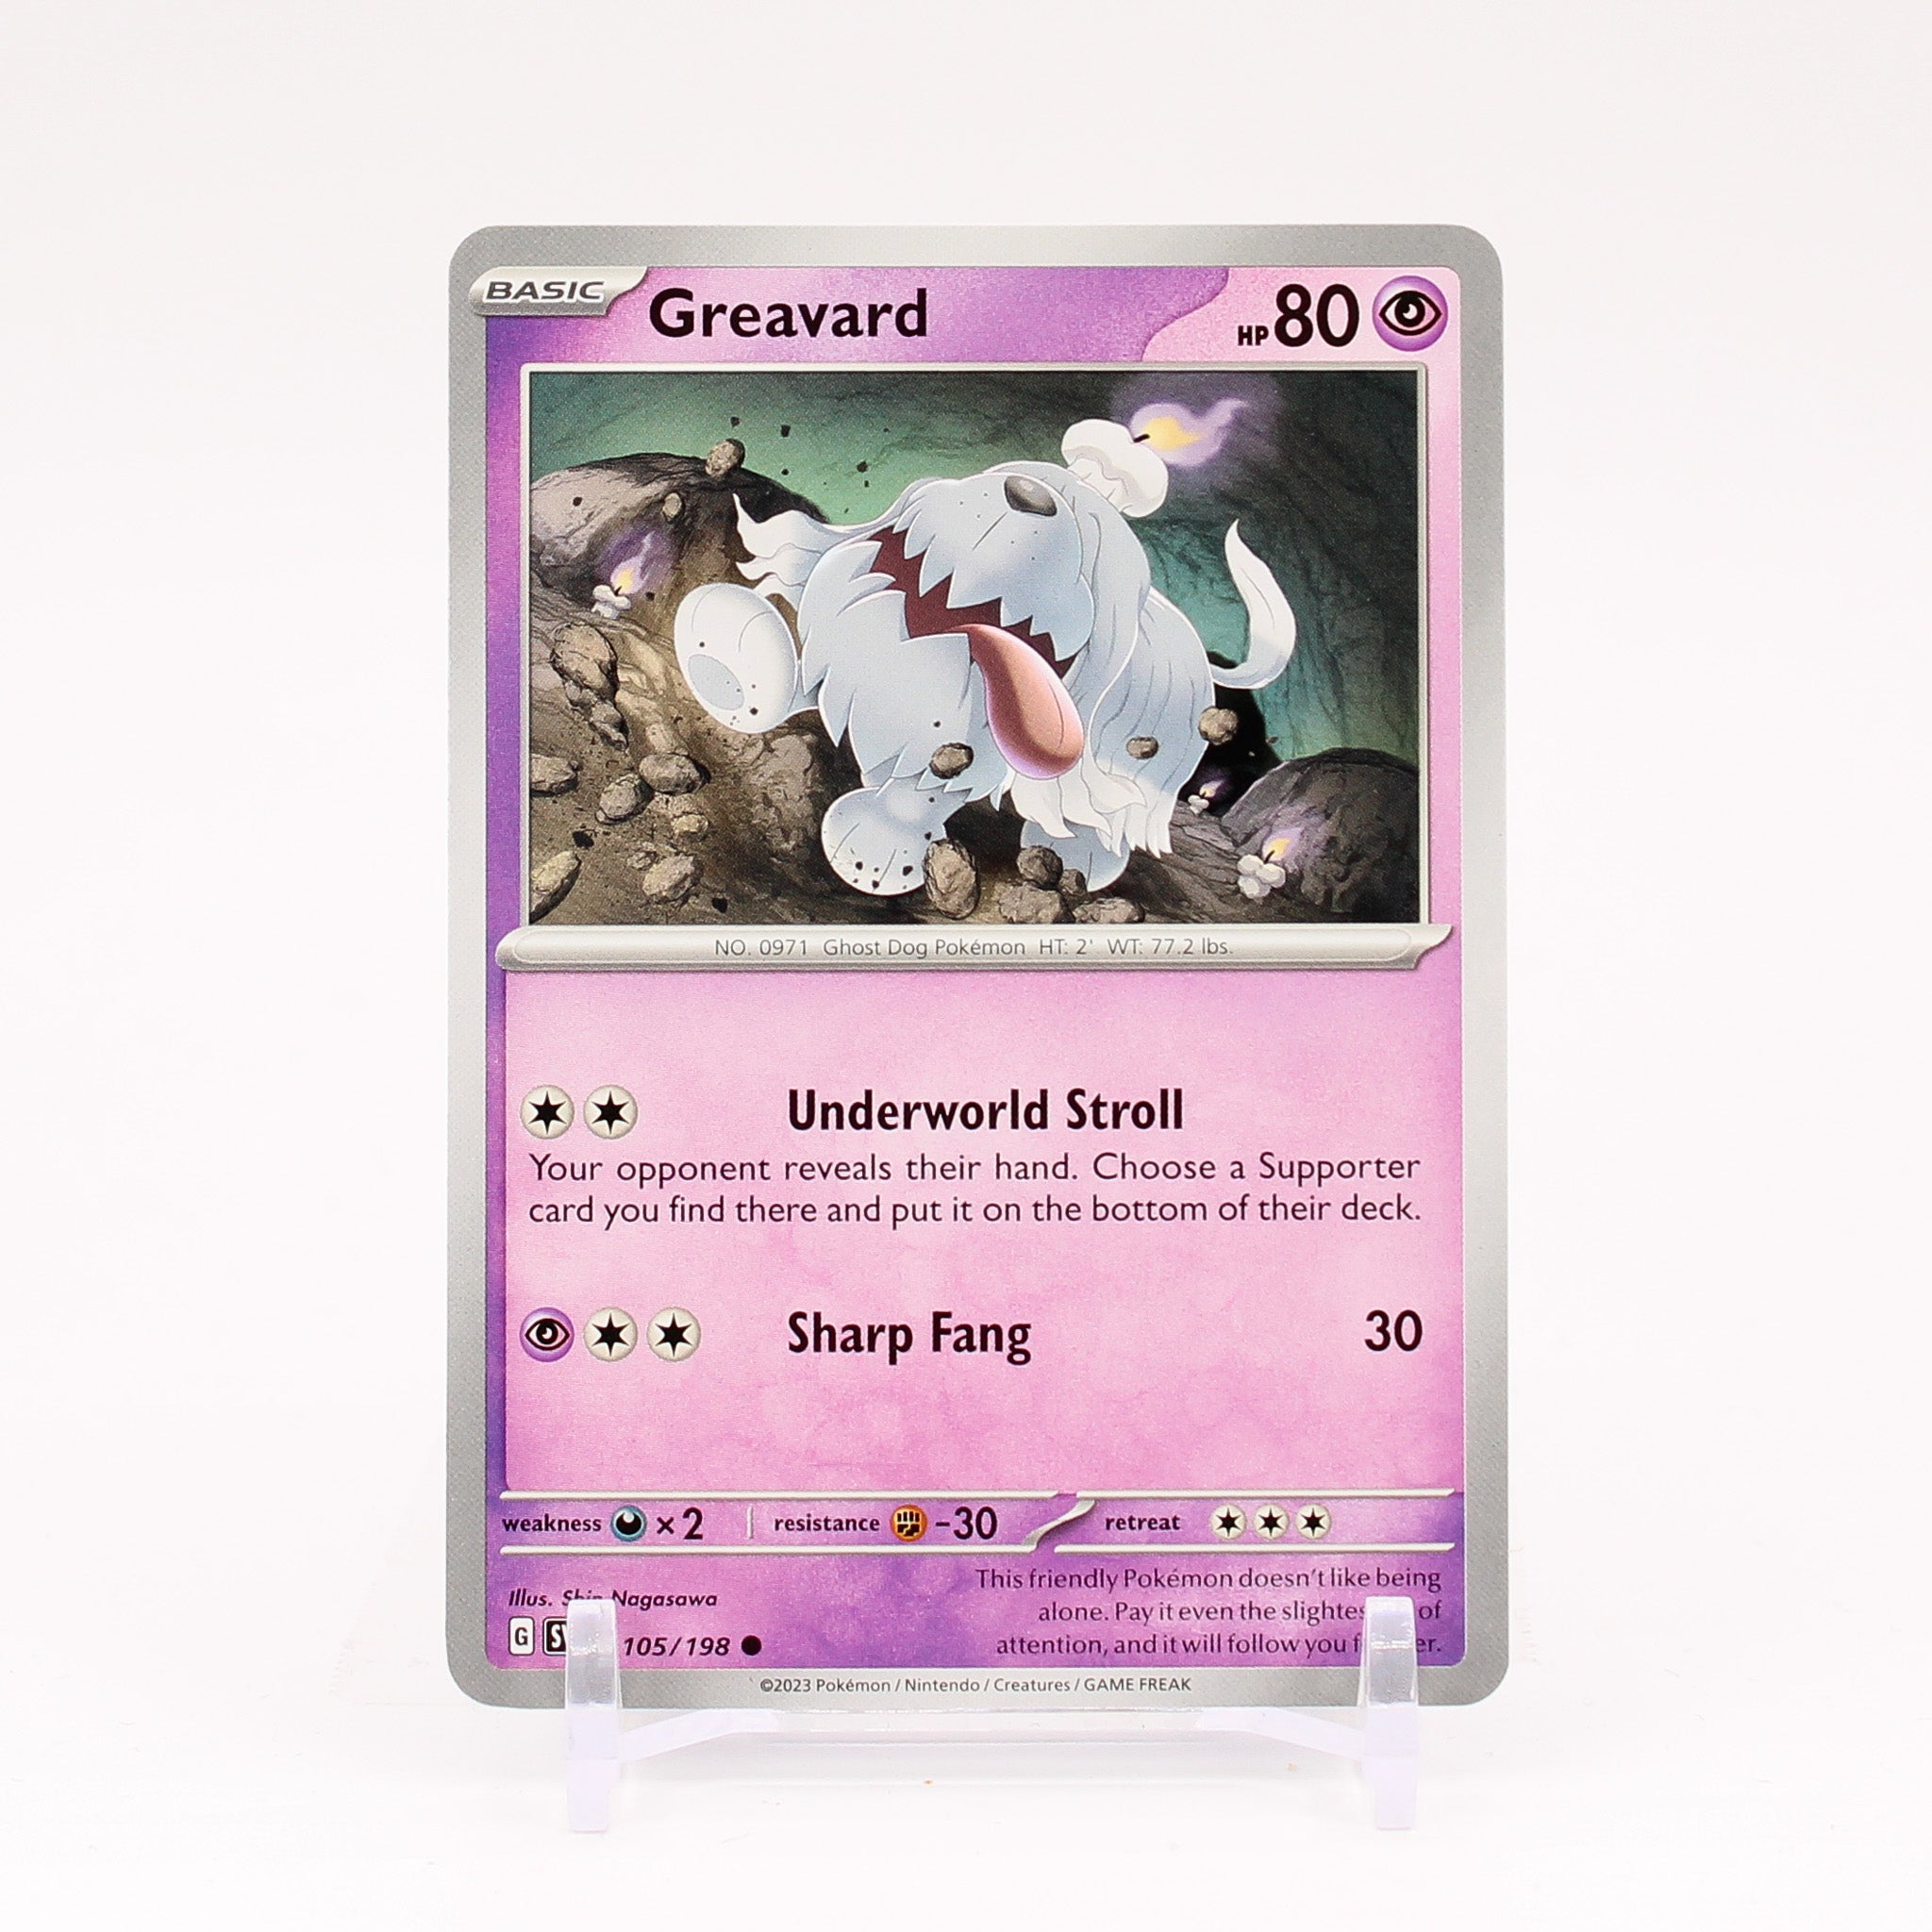 Novo Pokémon Greavard estará em Pokémon Scarlet e Violet